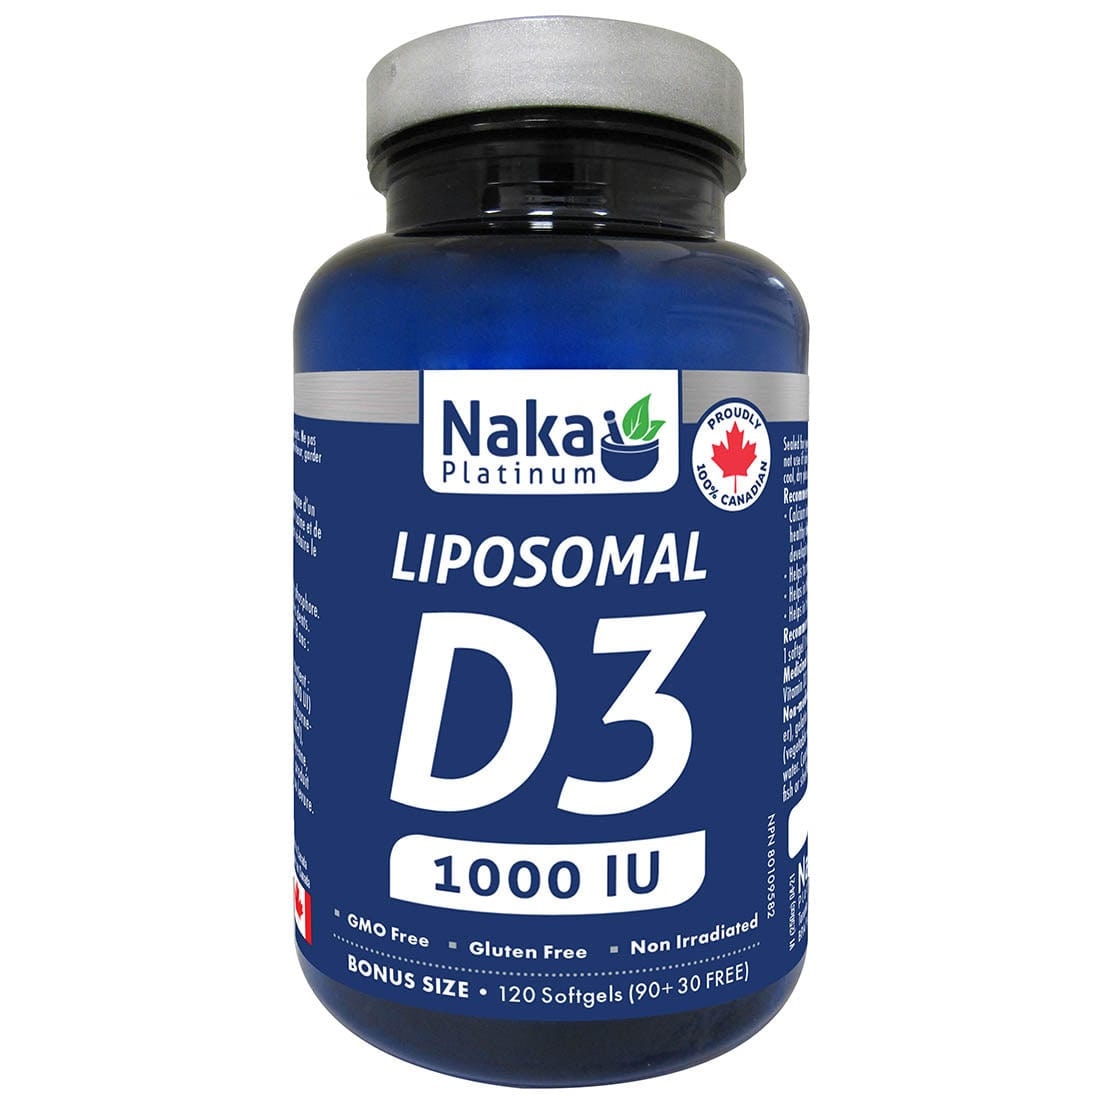 Naka Platinum Liposomal D3, 120 Softgels